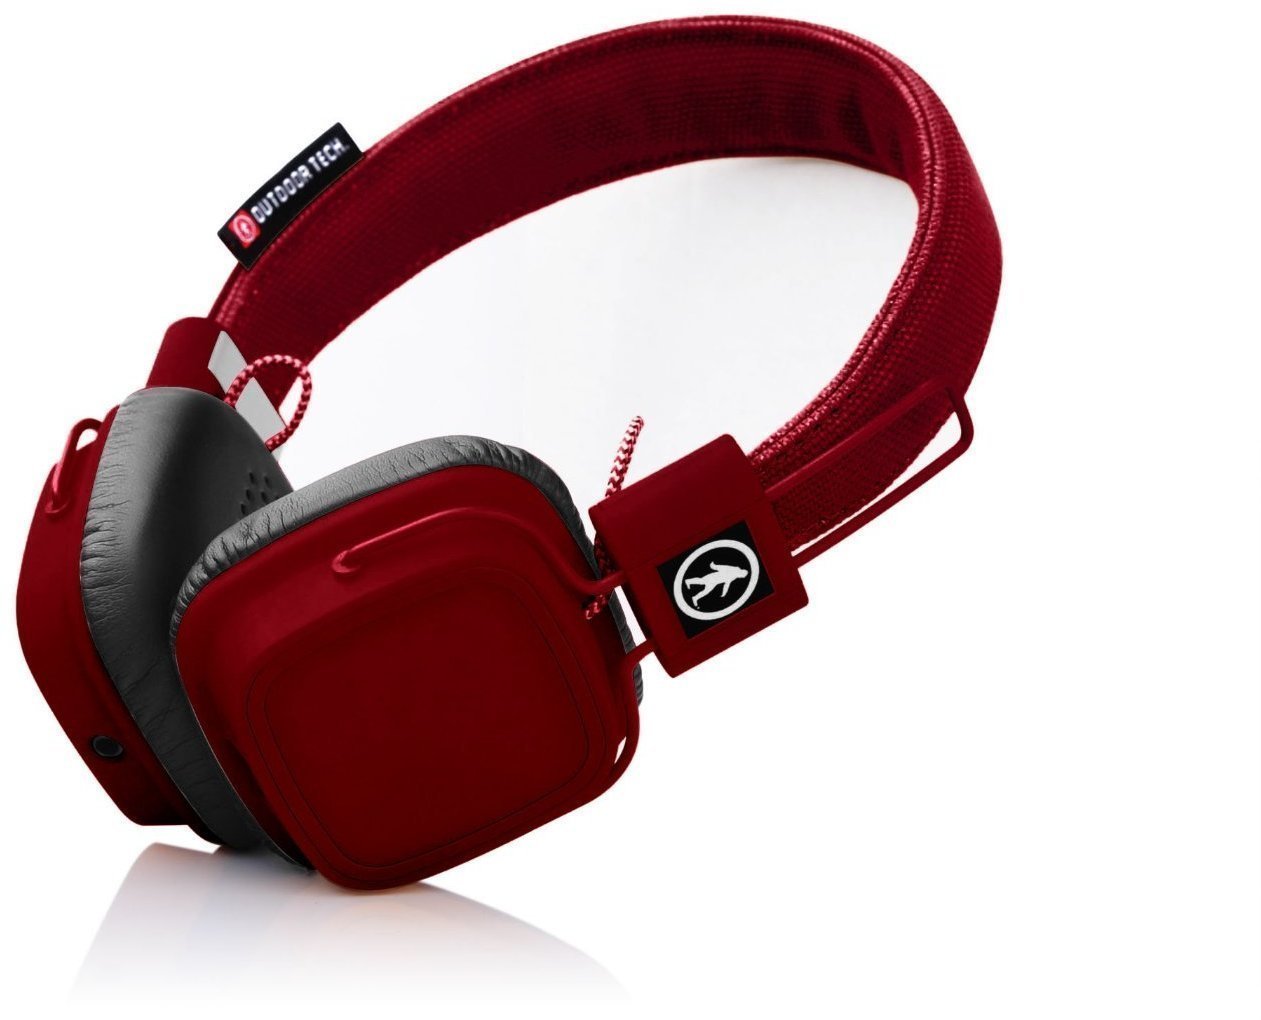 Hör-Sprech-Kombination Outdoor Tech Privates - Wireless Touch Control Headphones - Crimson